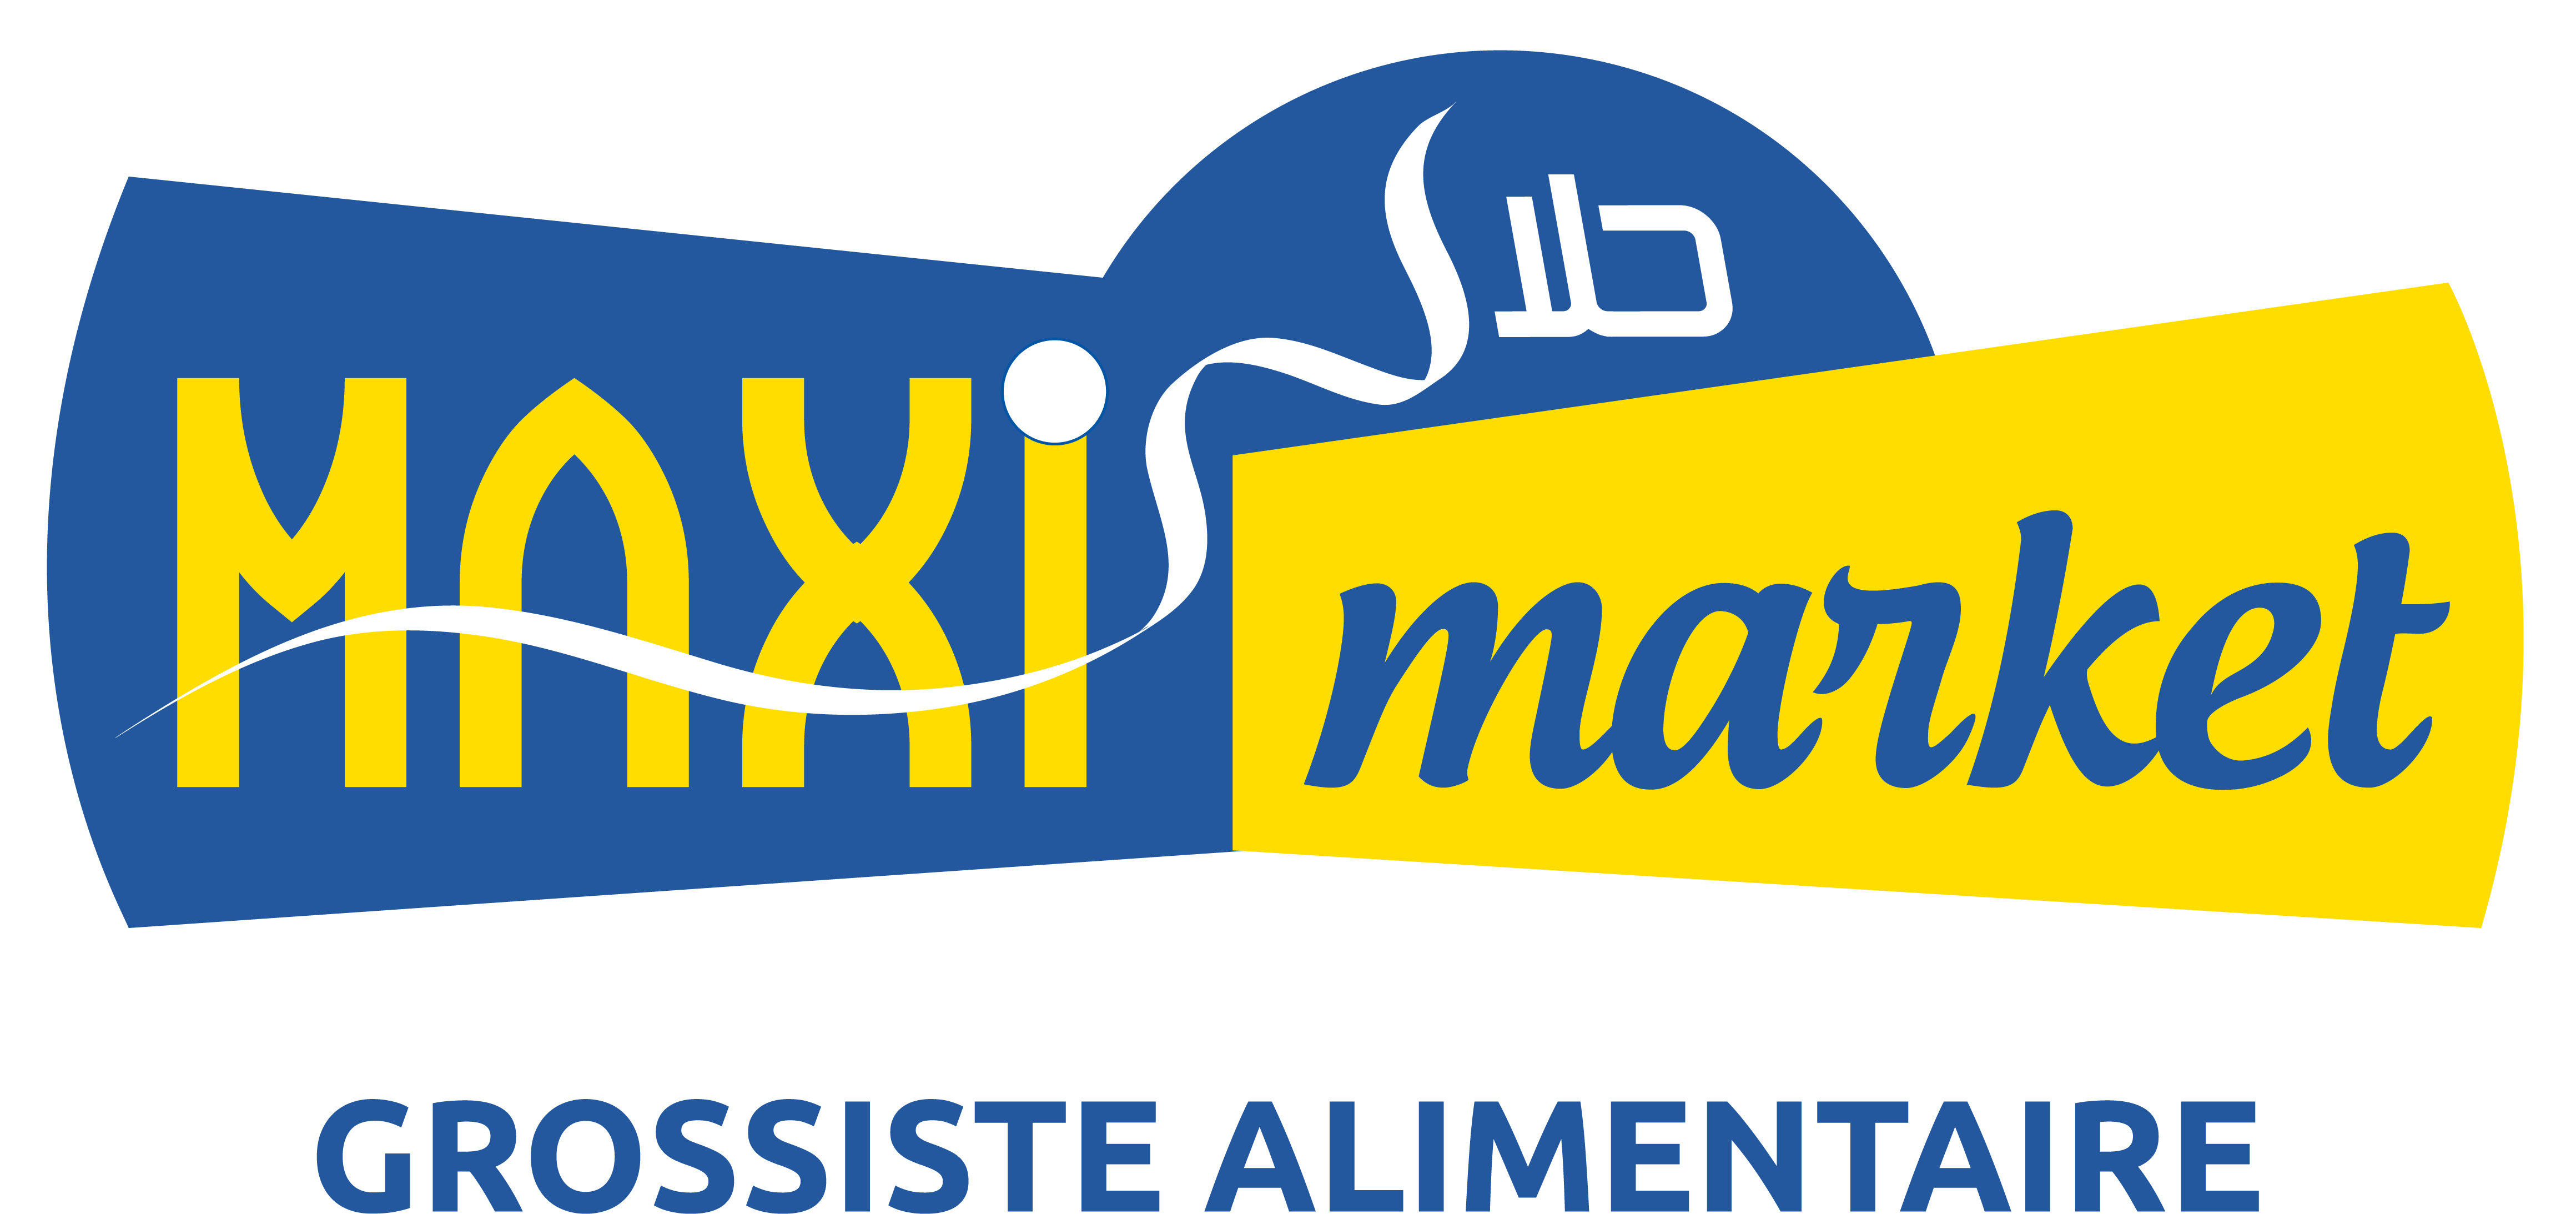 maxi-market-logo-1700809236